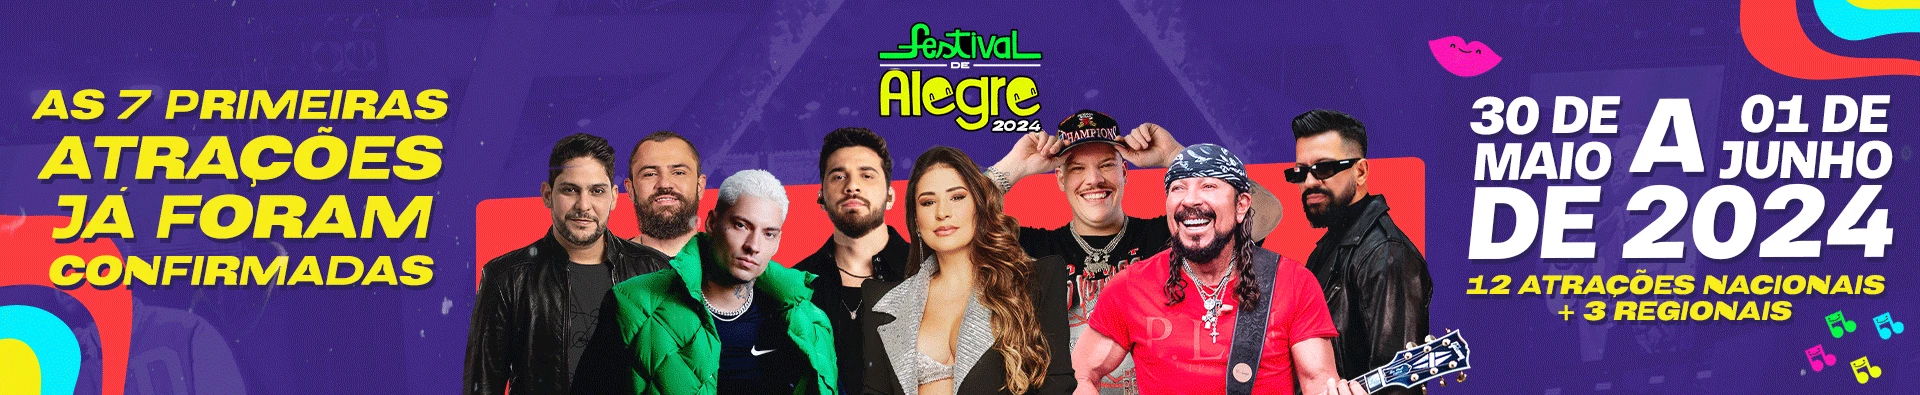 Festival de Alegre 2024